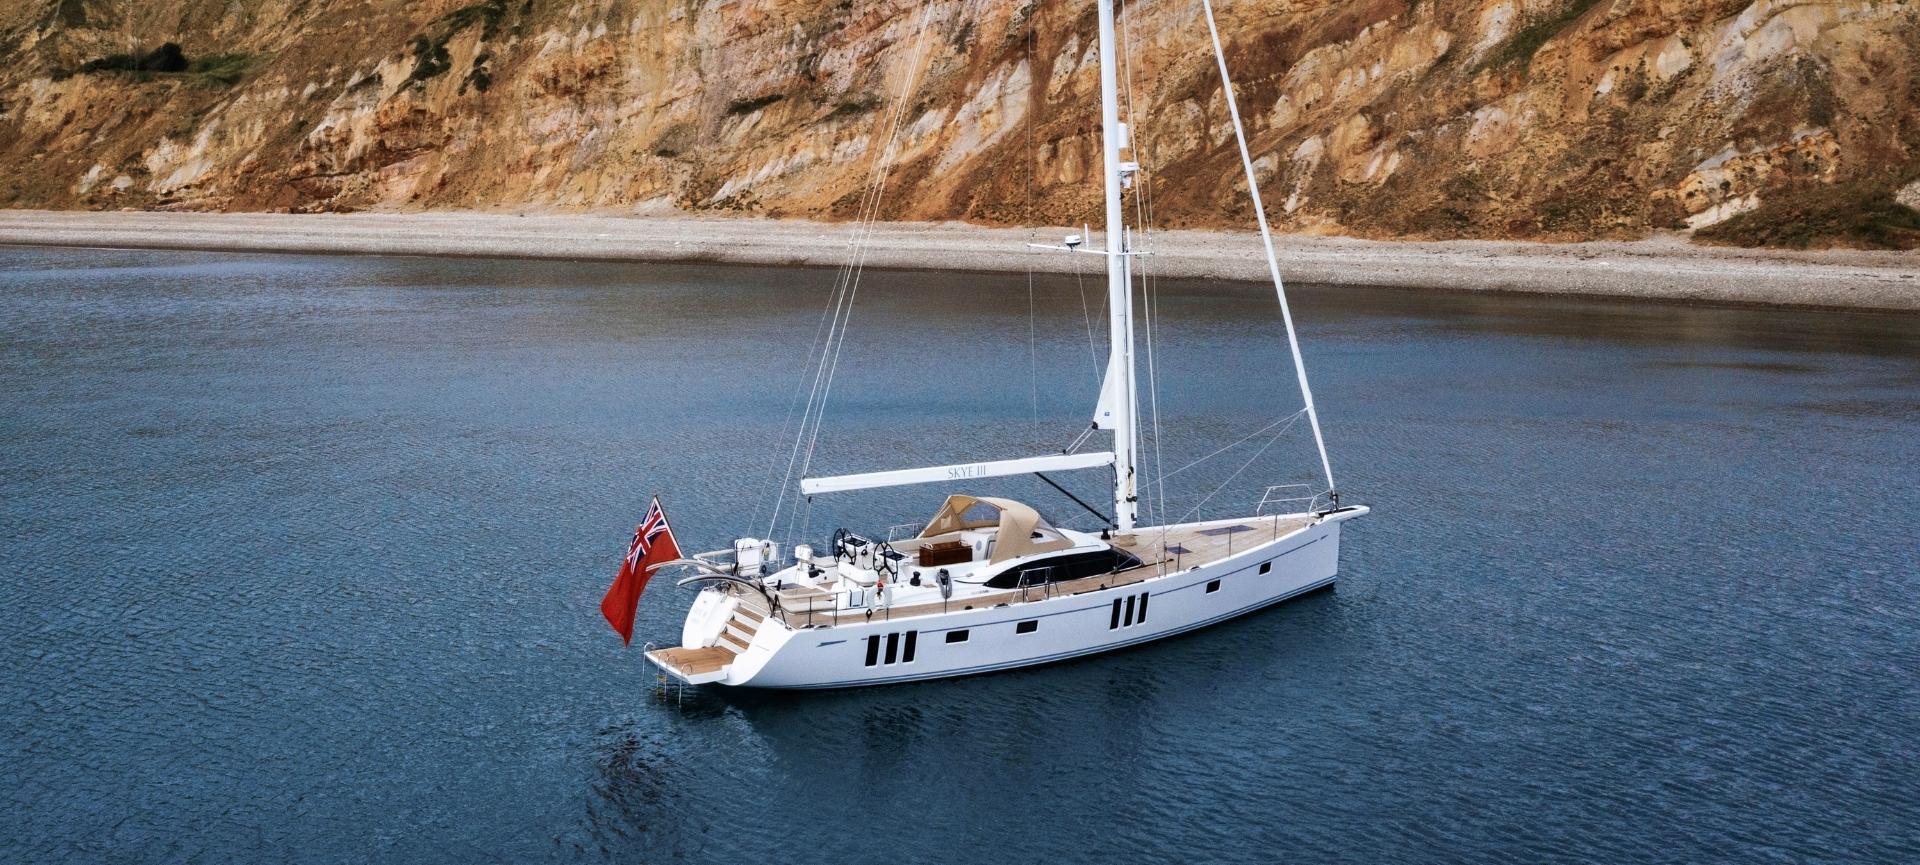 60 ft sailing yacht